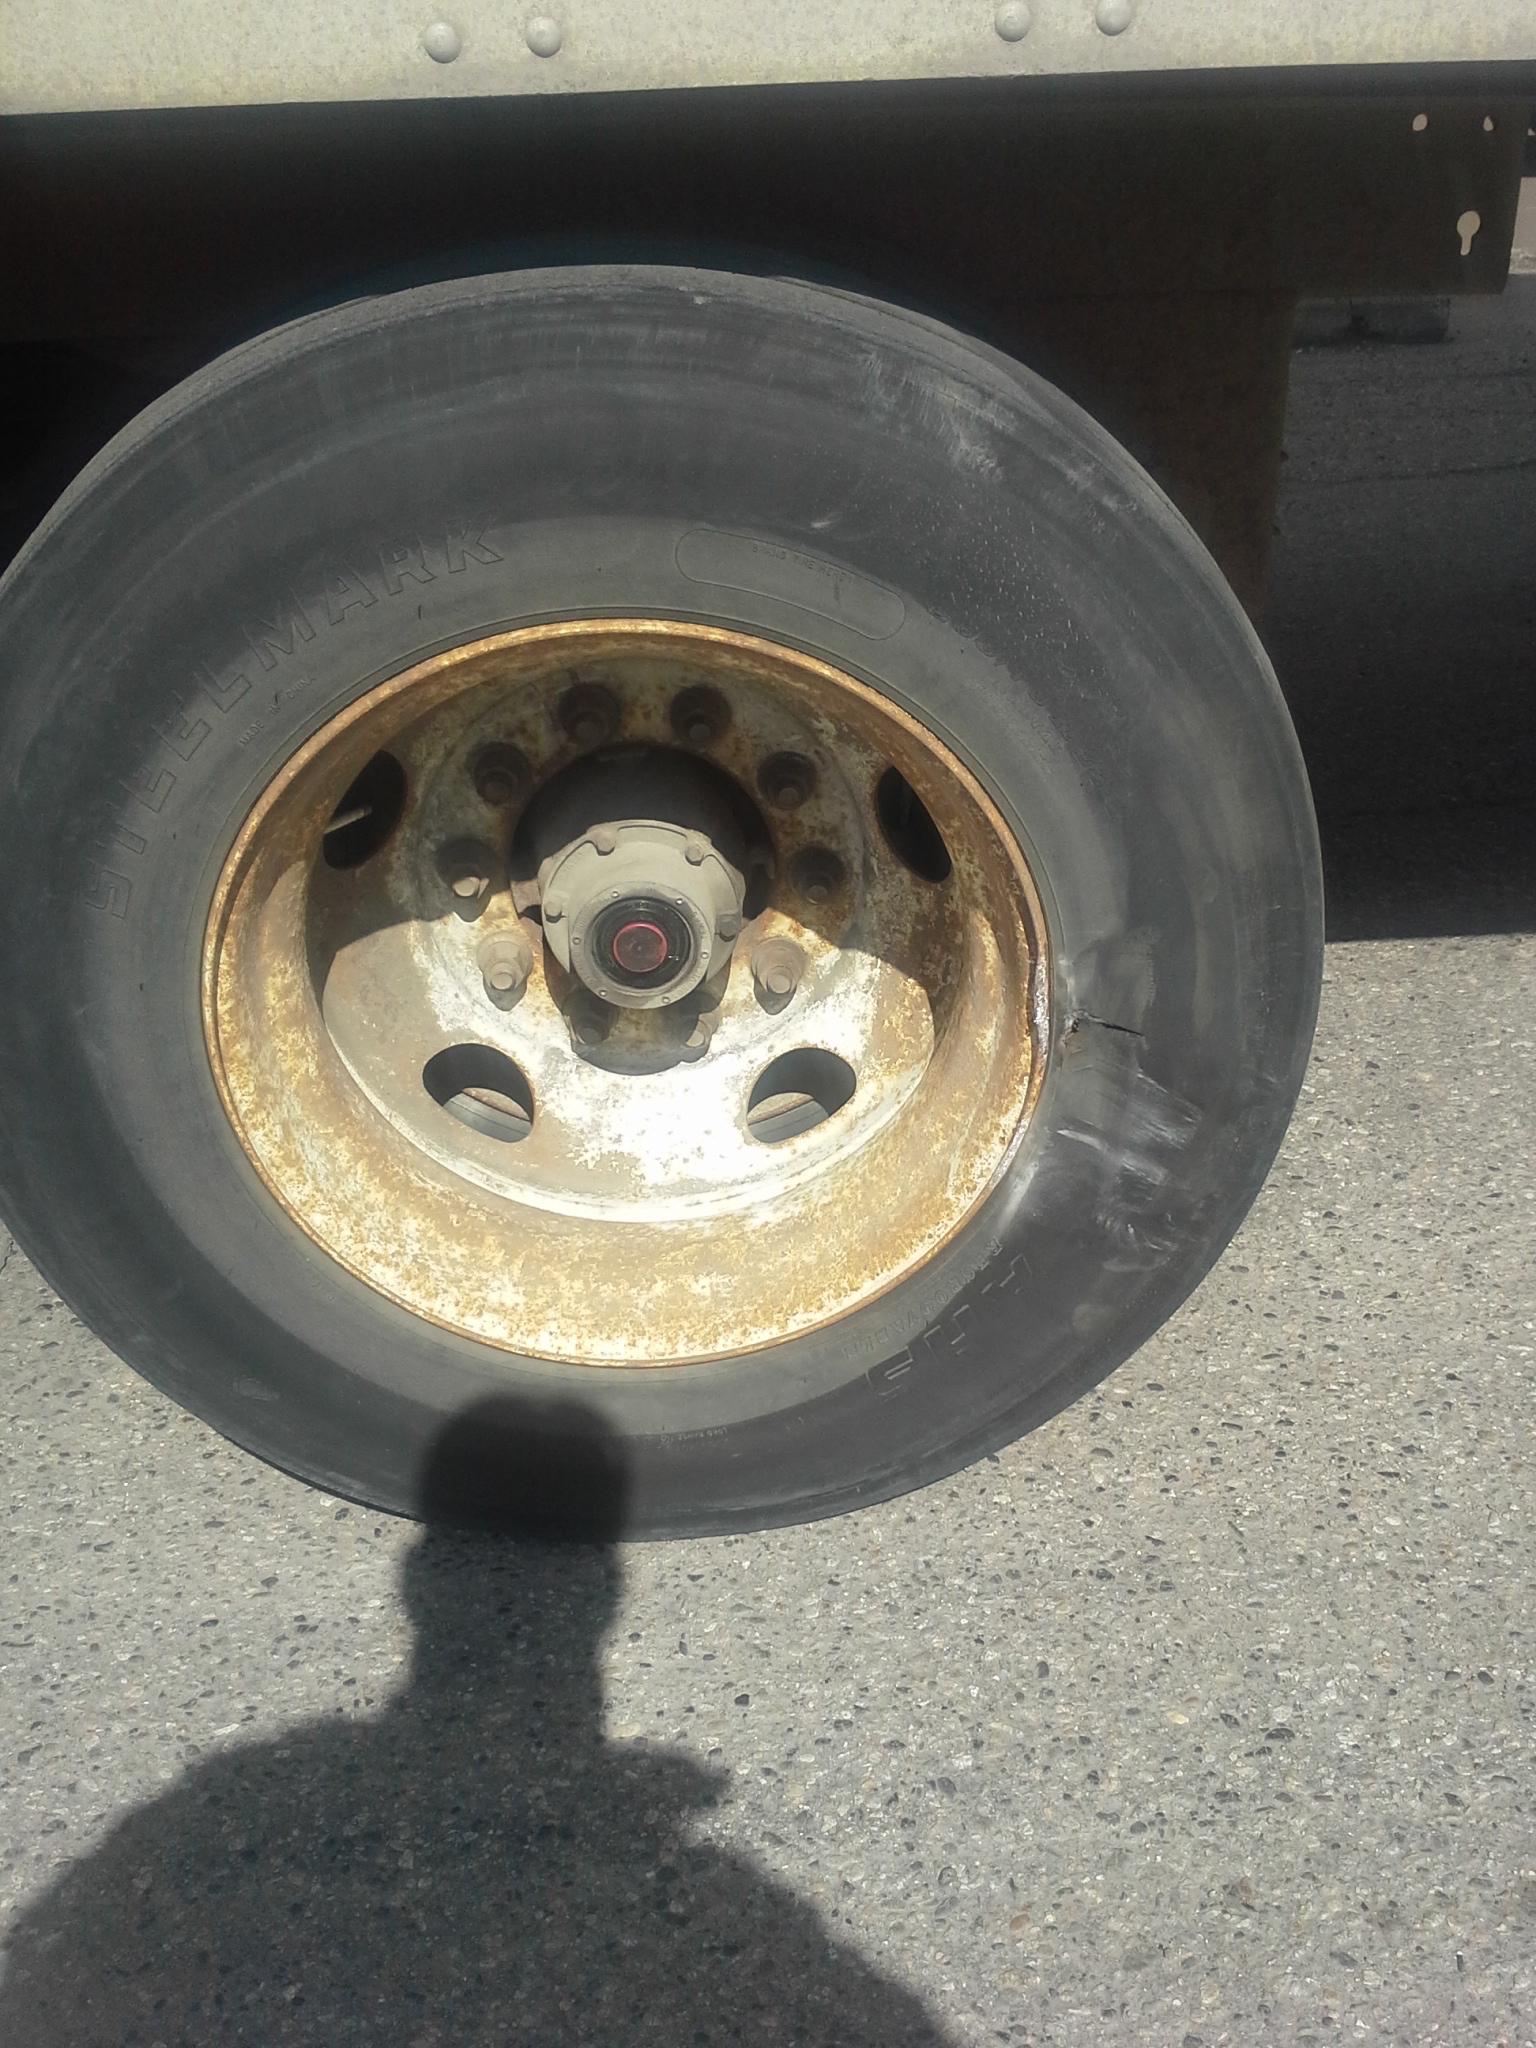 A damaged semi-trailer tire where the driver struck a concrete barrier. The concrete barrier bent the semi-trailer tire rim.